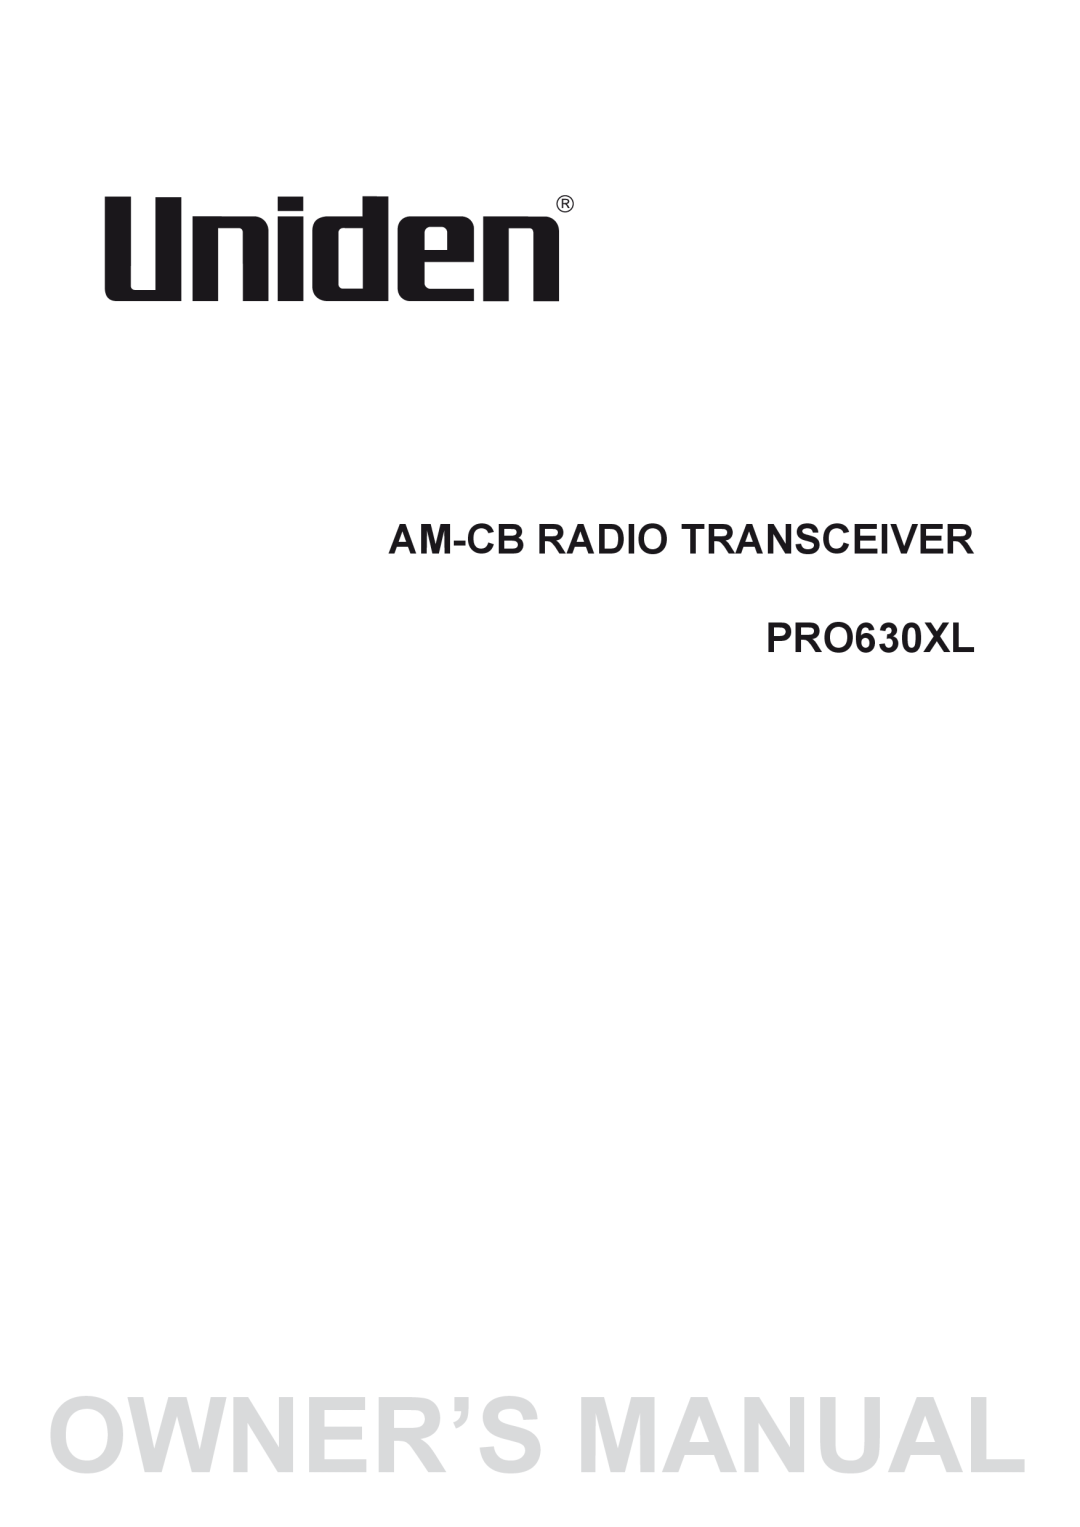 Uniden owner manual UNIDEN Model PRO630XL, OWNER’S1 MANUAL, AM-CBRADIO TRANSCEIVER PRO630XL 